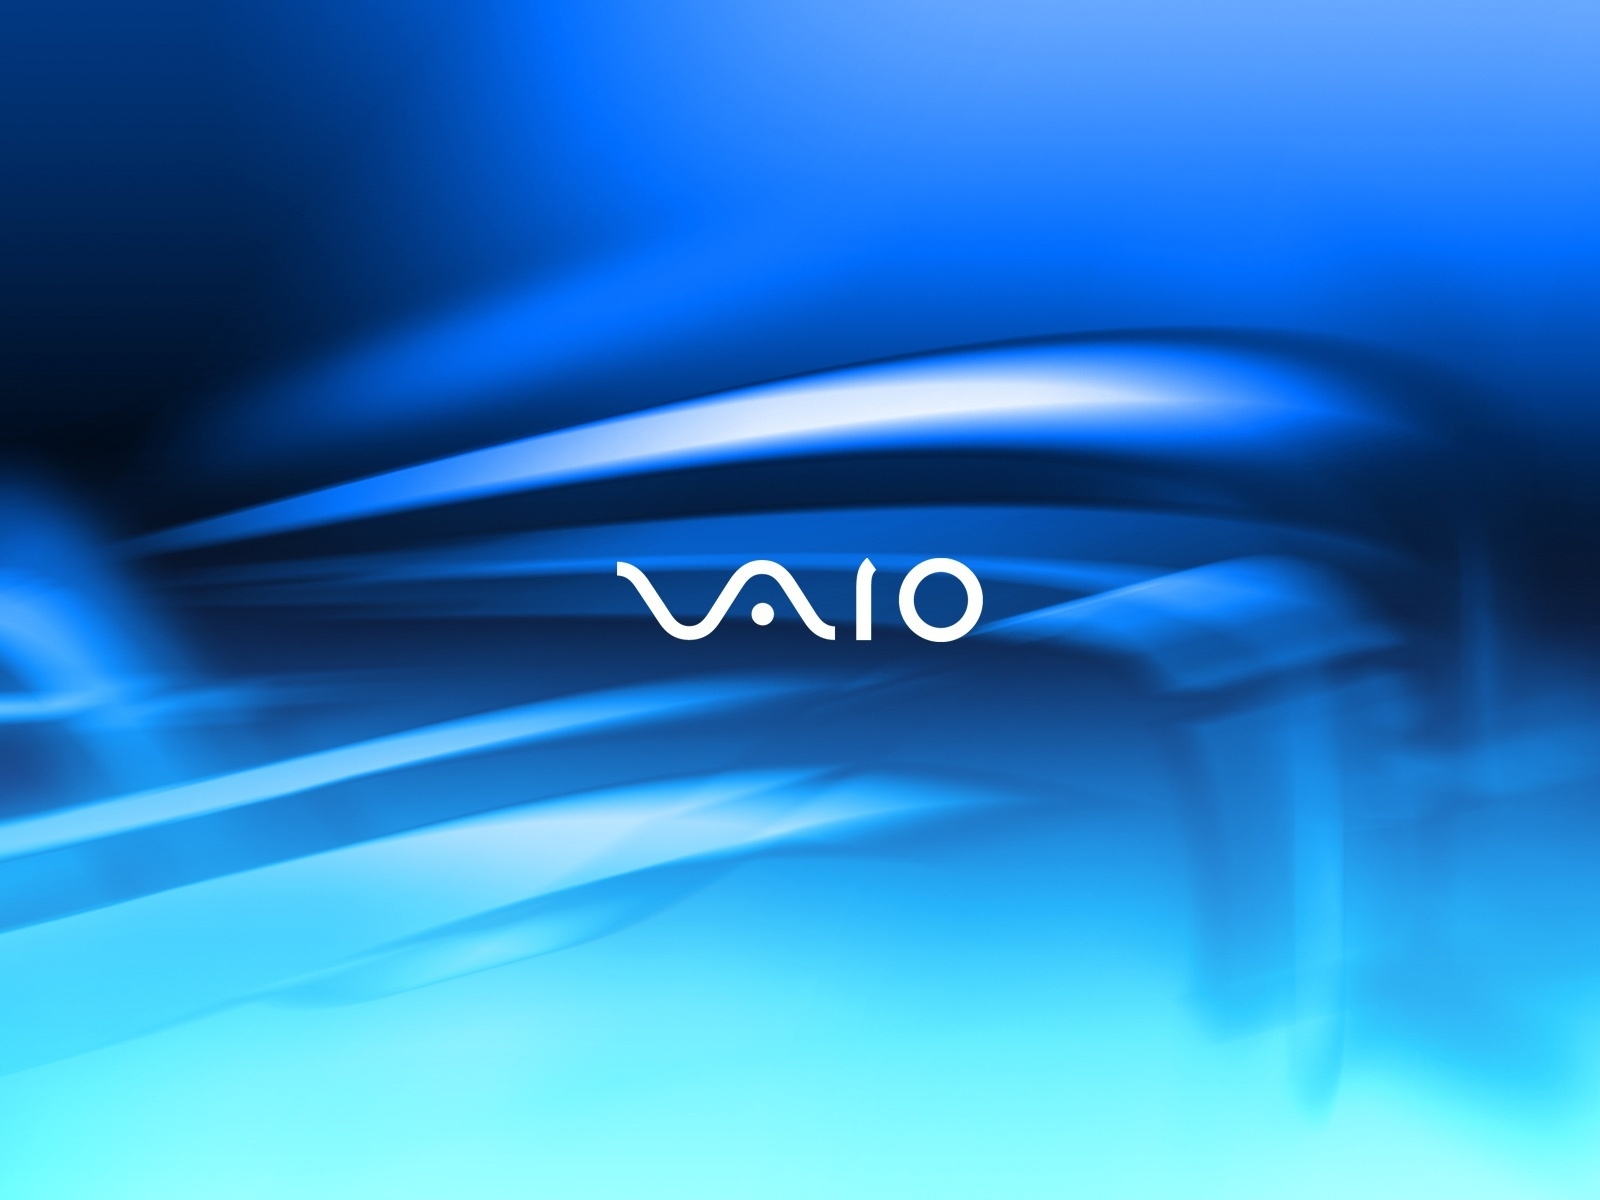 Vaio light blue for 1600 x 1200 resolution